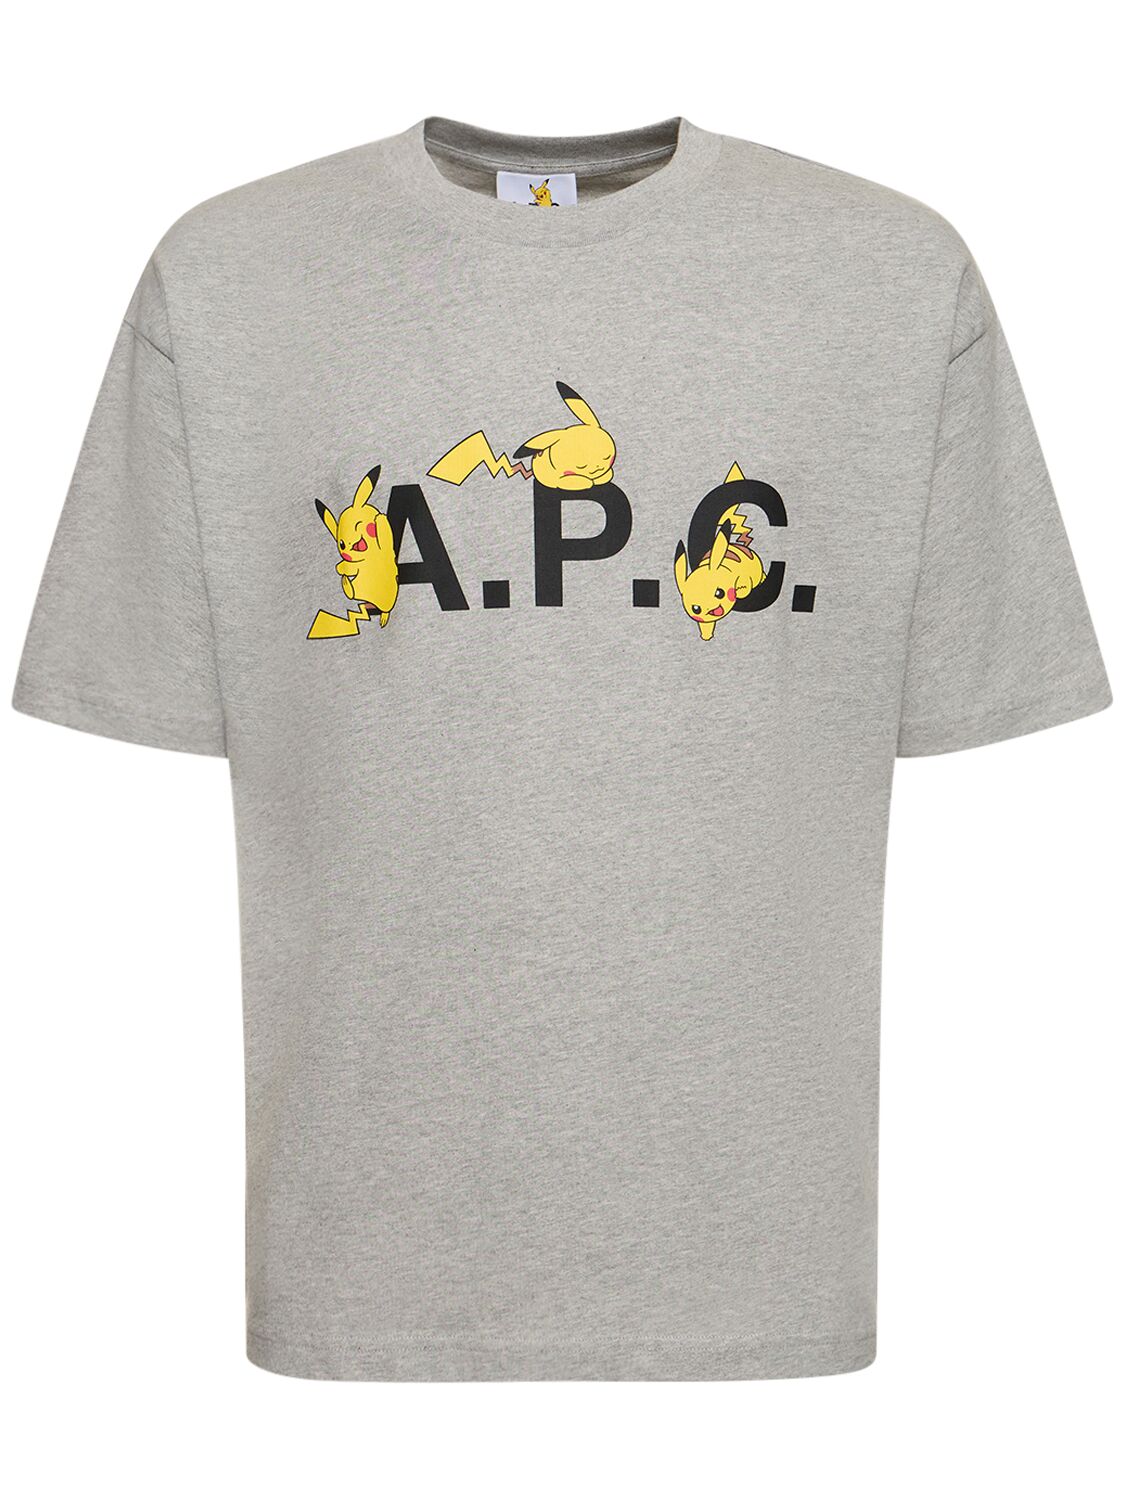 T-shirt X Pokémon In Cotone Organico - A.P.C. - Modalova